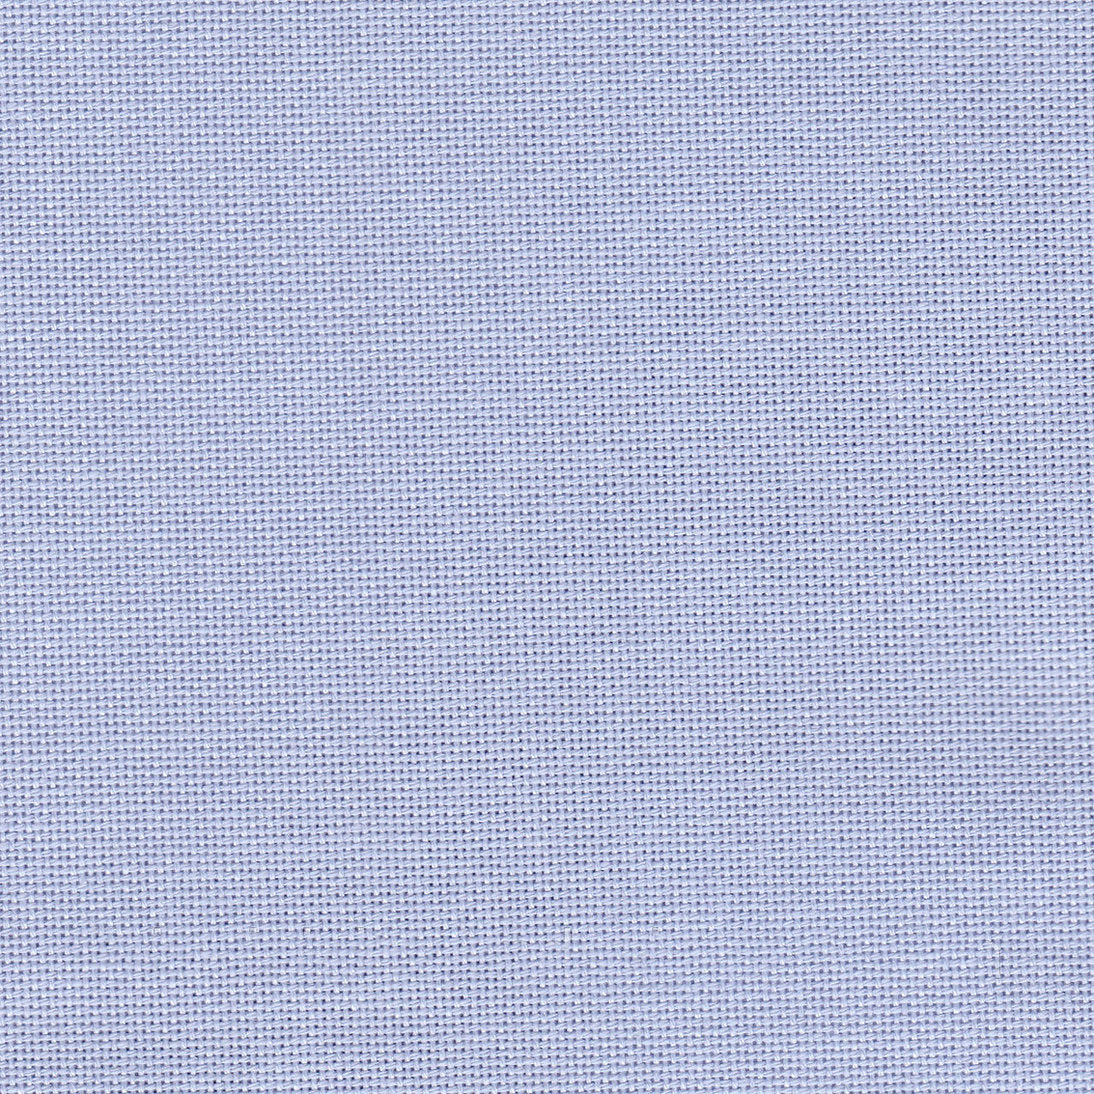 3835/501 Lugana Fabric 25 ct. Zweigart's Wedgwood for cross stitch